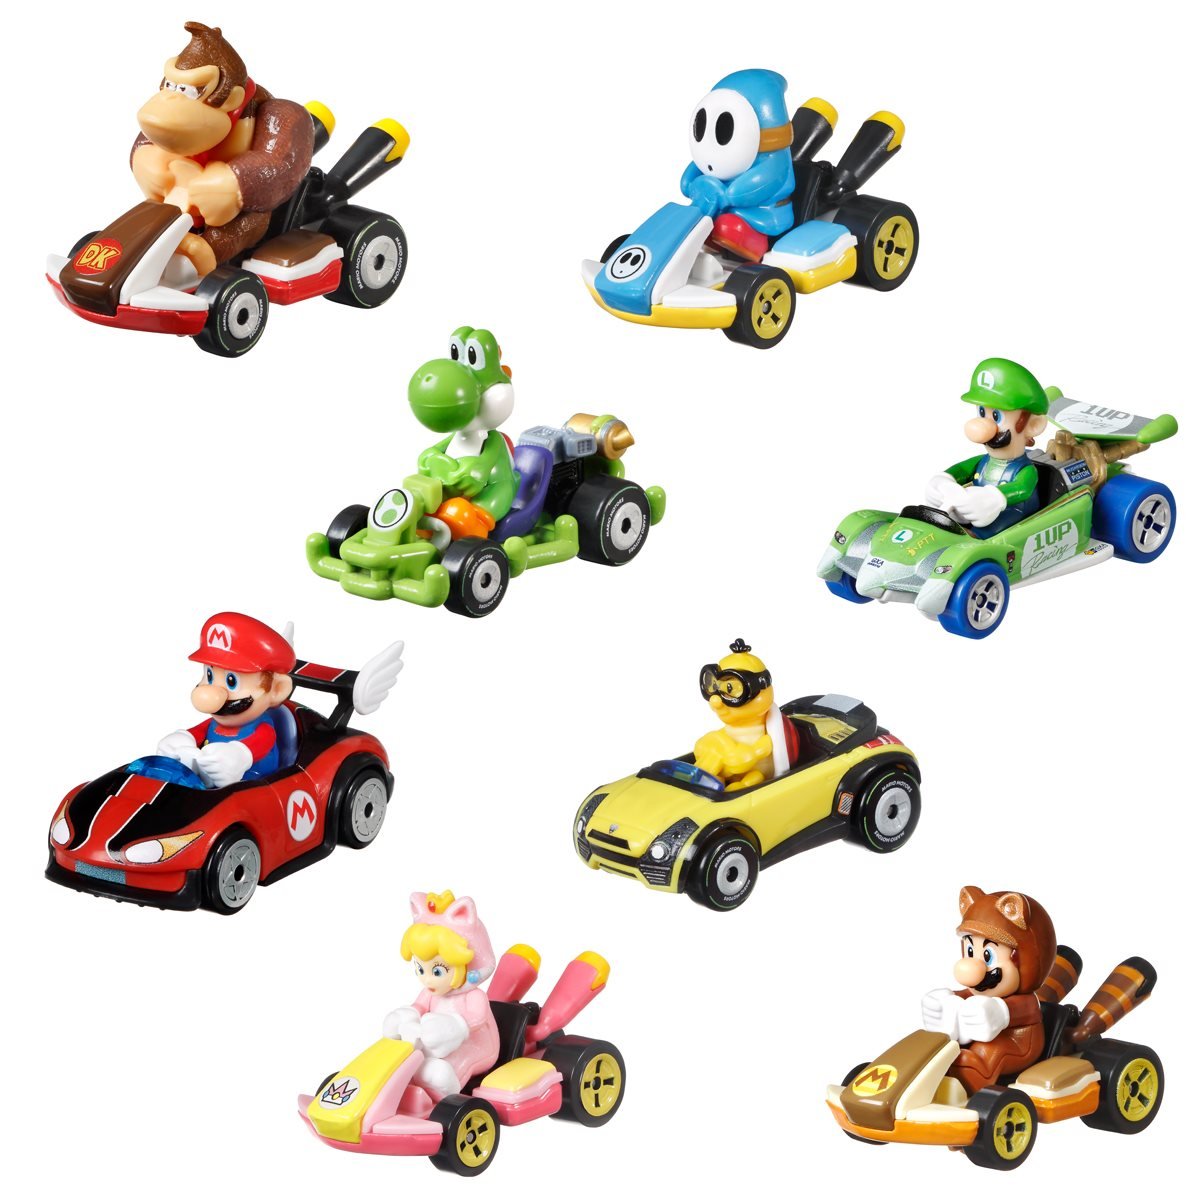 Mario Kart Hot Wheels Mix 3 2021 Vehicle Case.